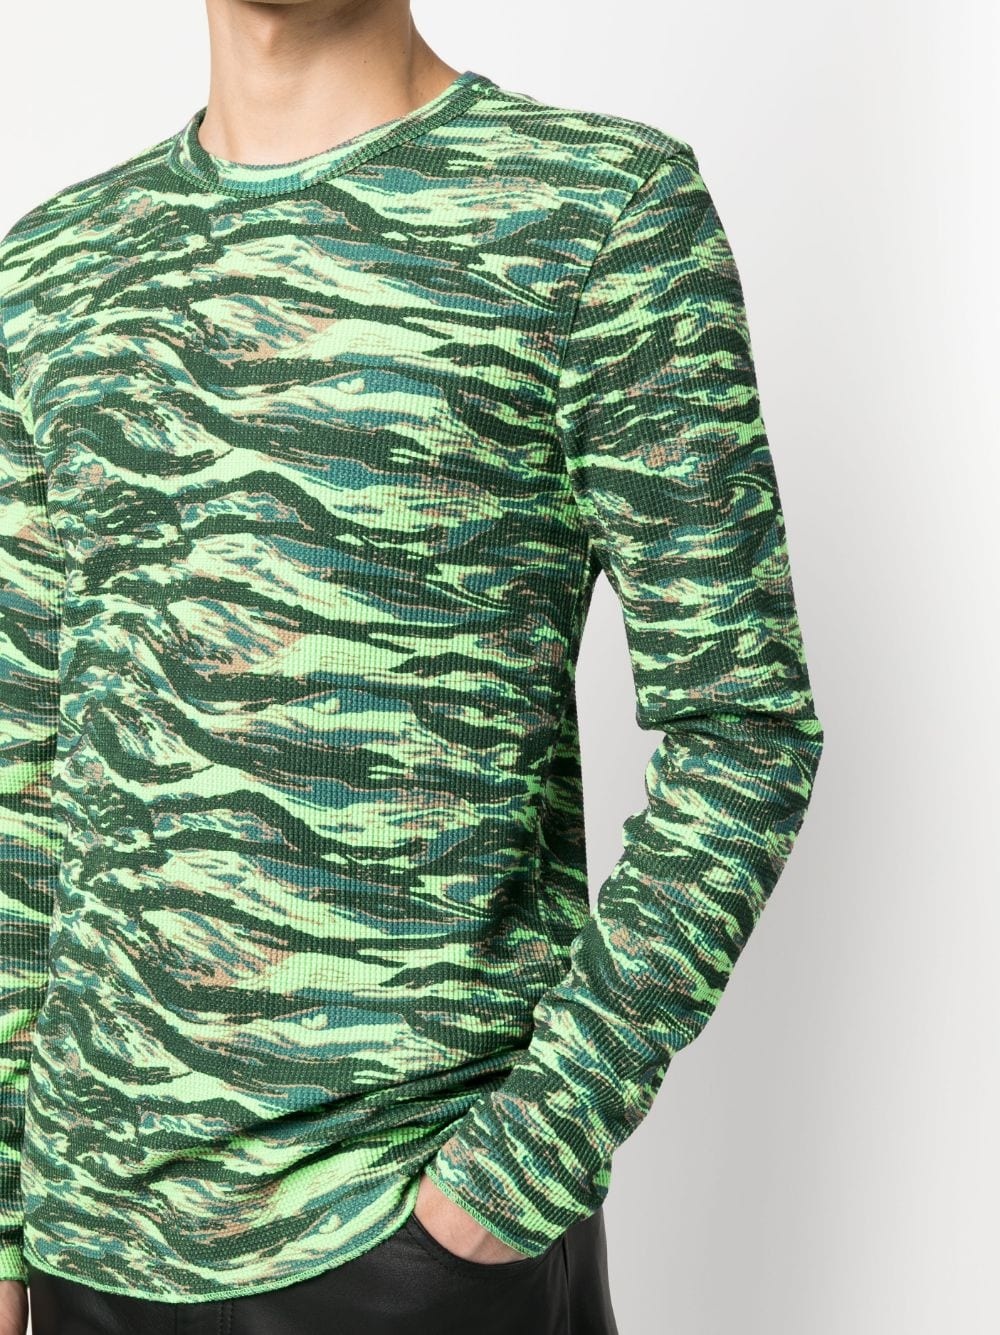 camouflage-print cotton T-shirt - 5